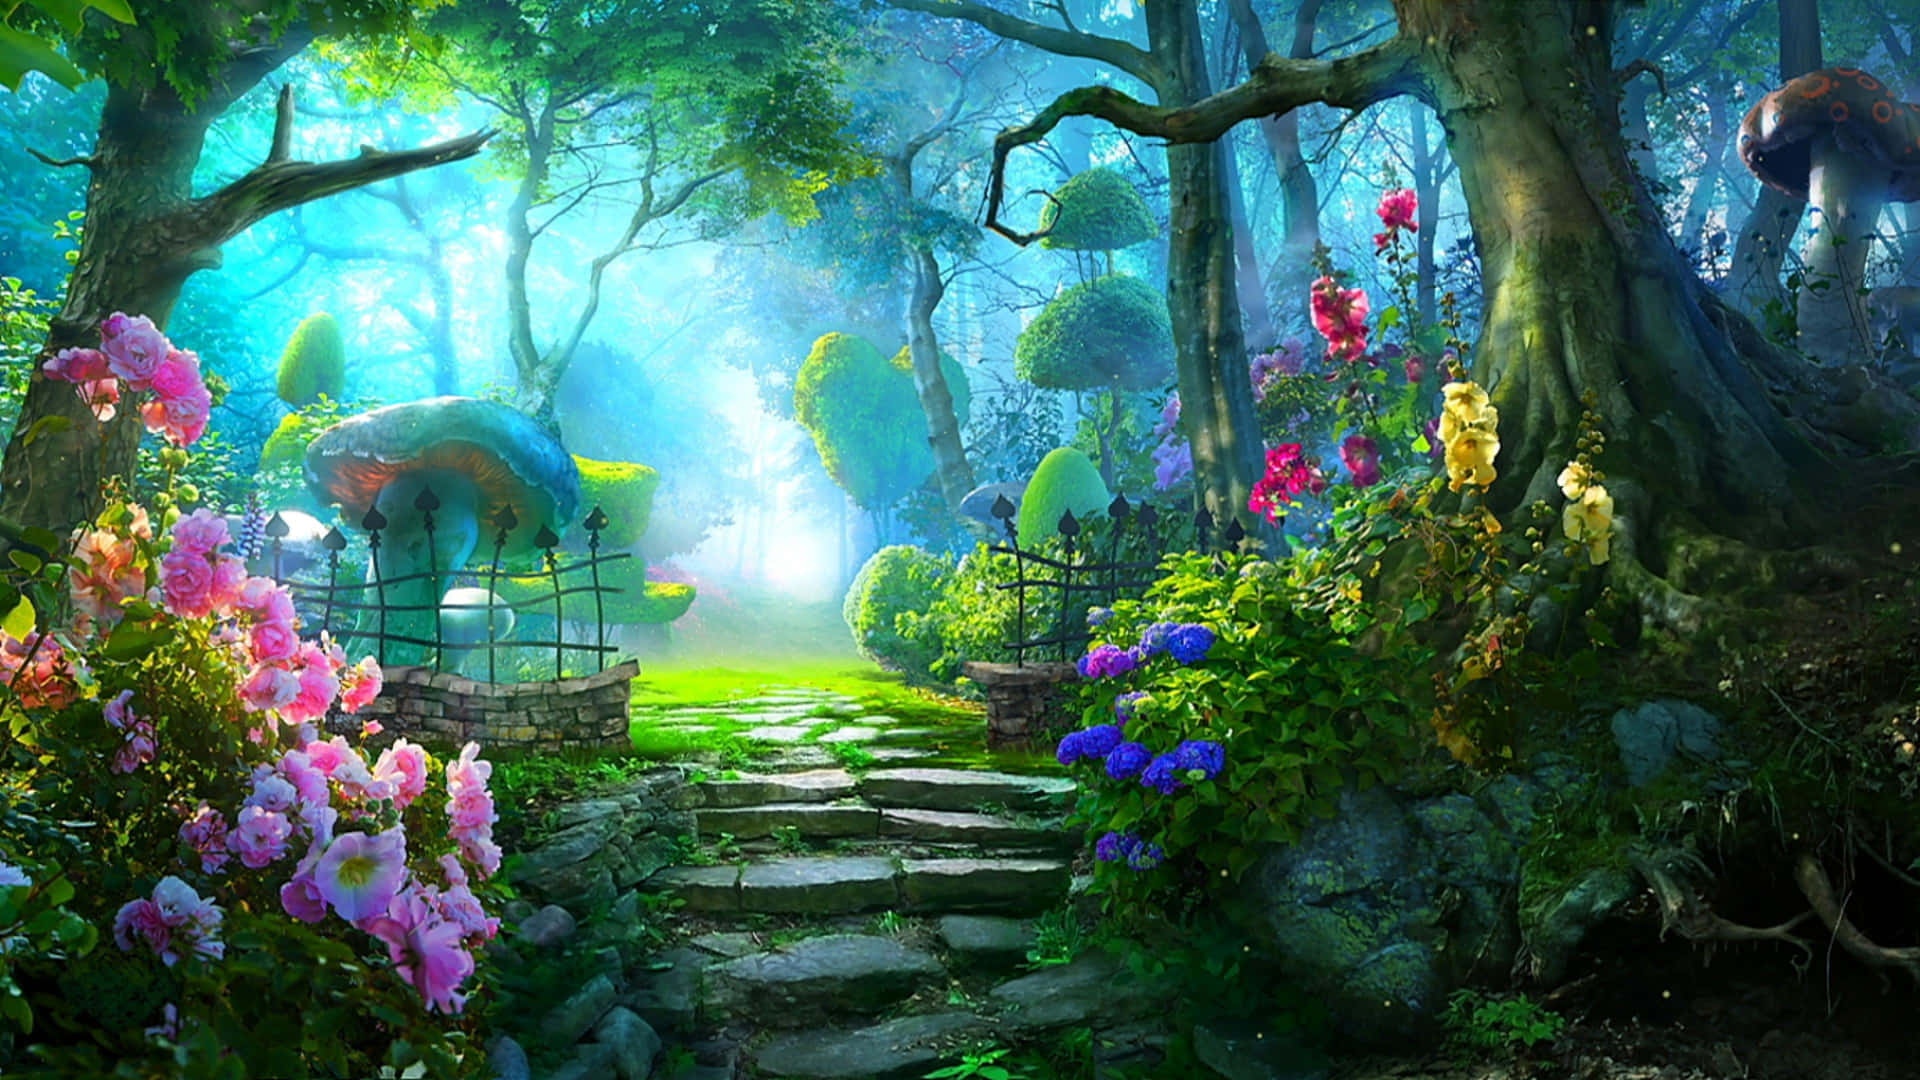 https://wallpapers.com/images/hd/fairy-forest-uojidmzlc8niwkgc.jpg